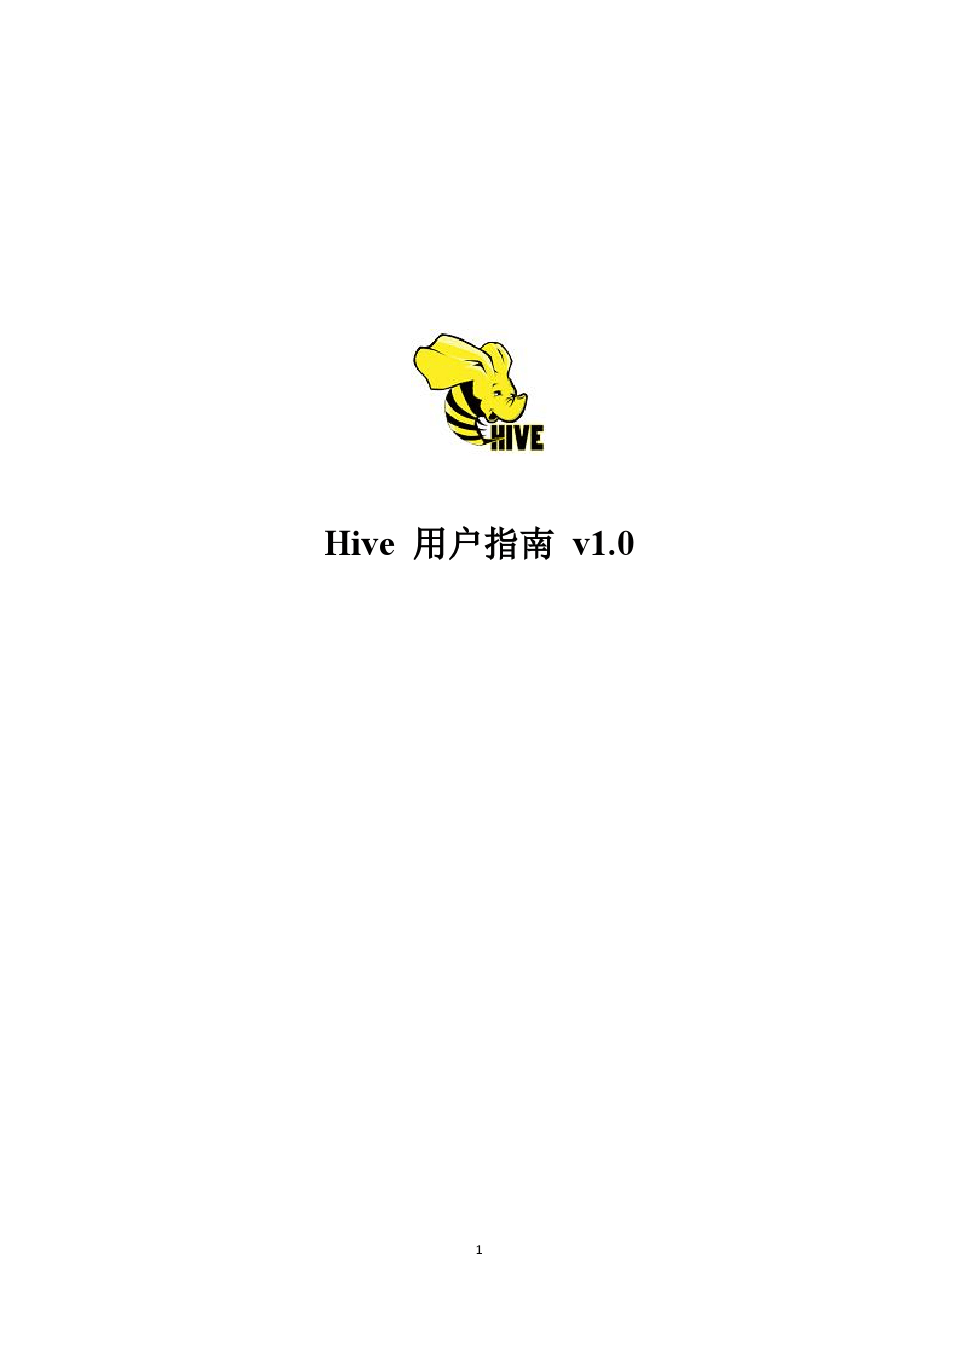 Hive用户指南(Hive_user_guide)_中文版